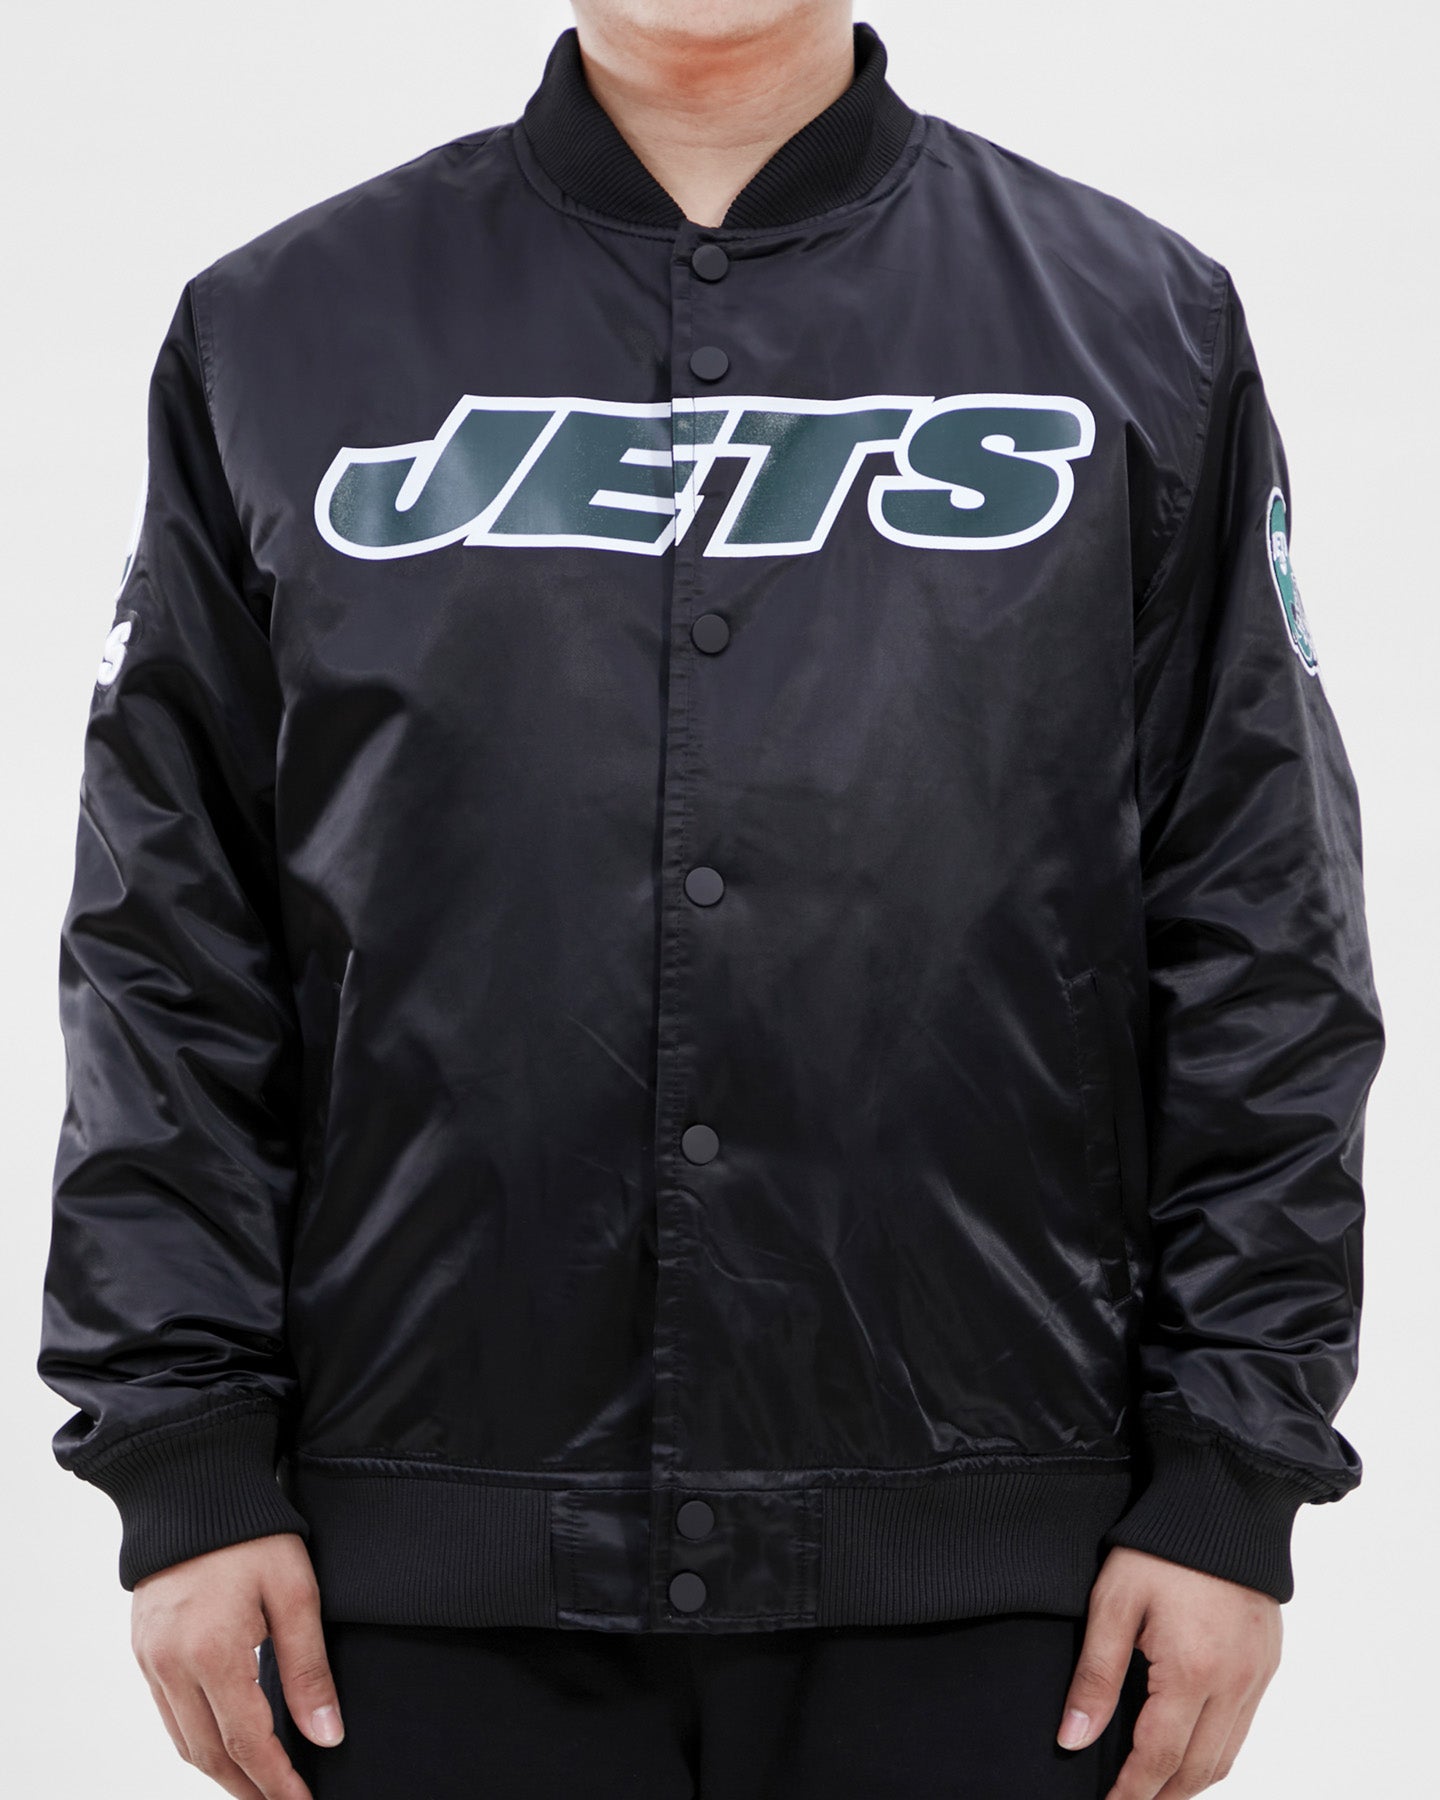 new york jets starter jacket